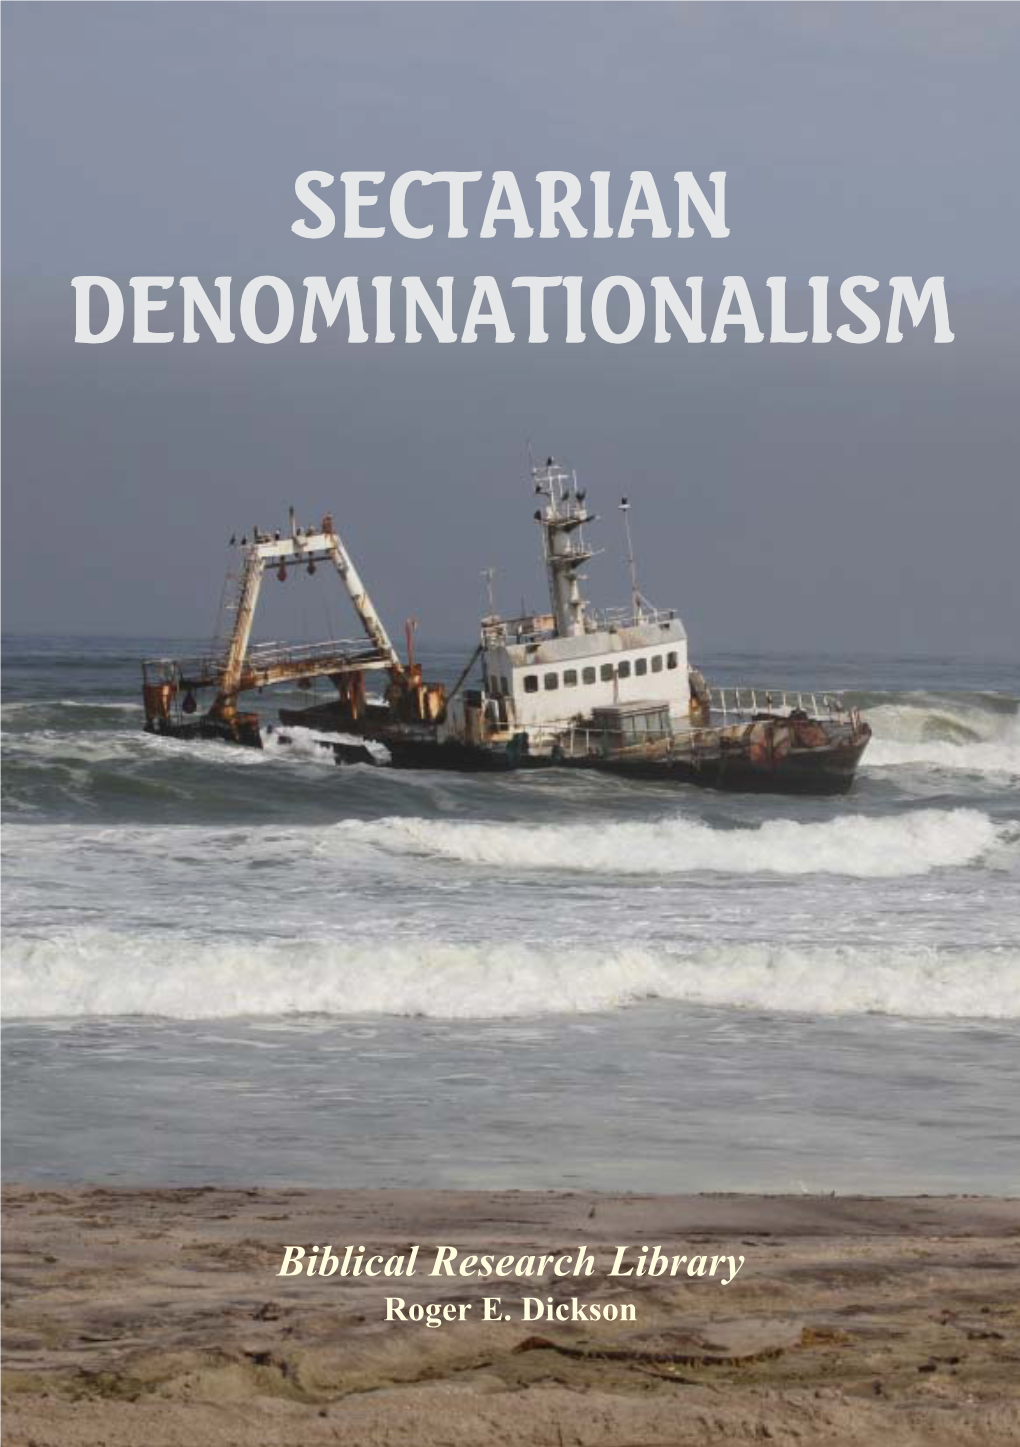 Book 29: Sectarian Denominationalism